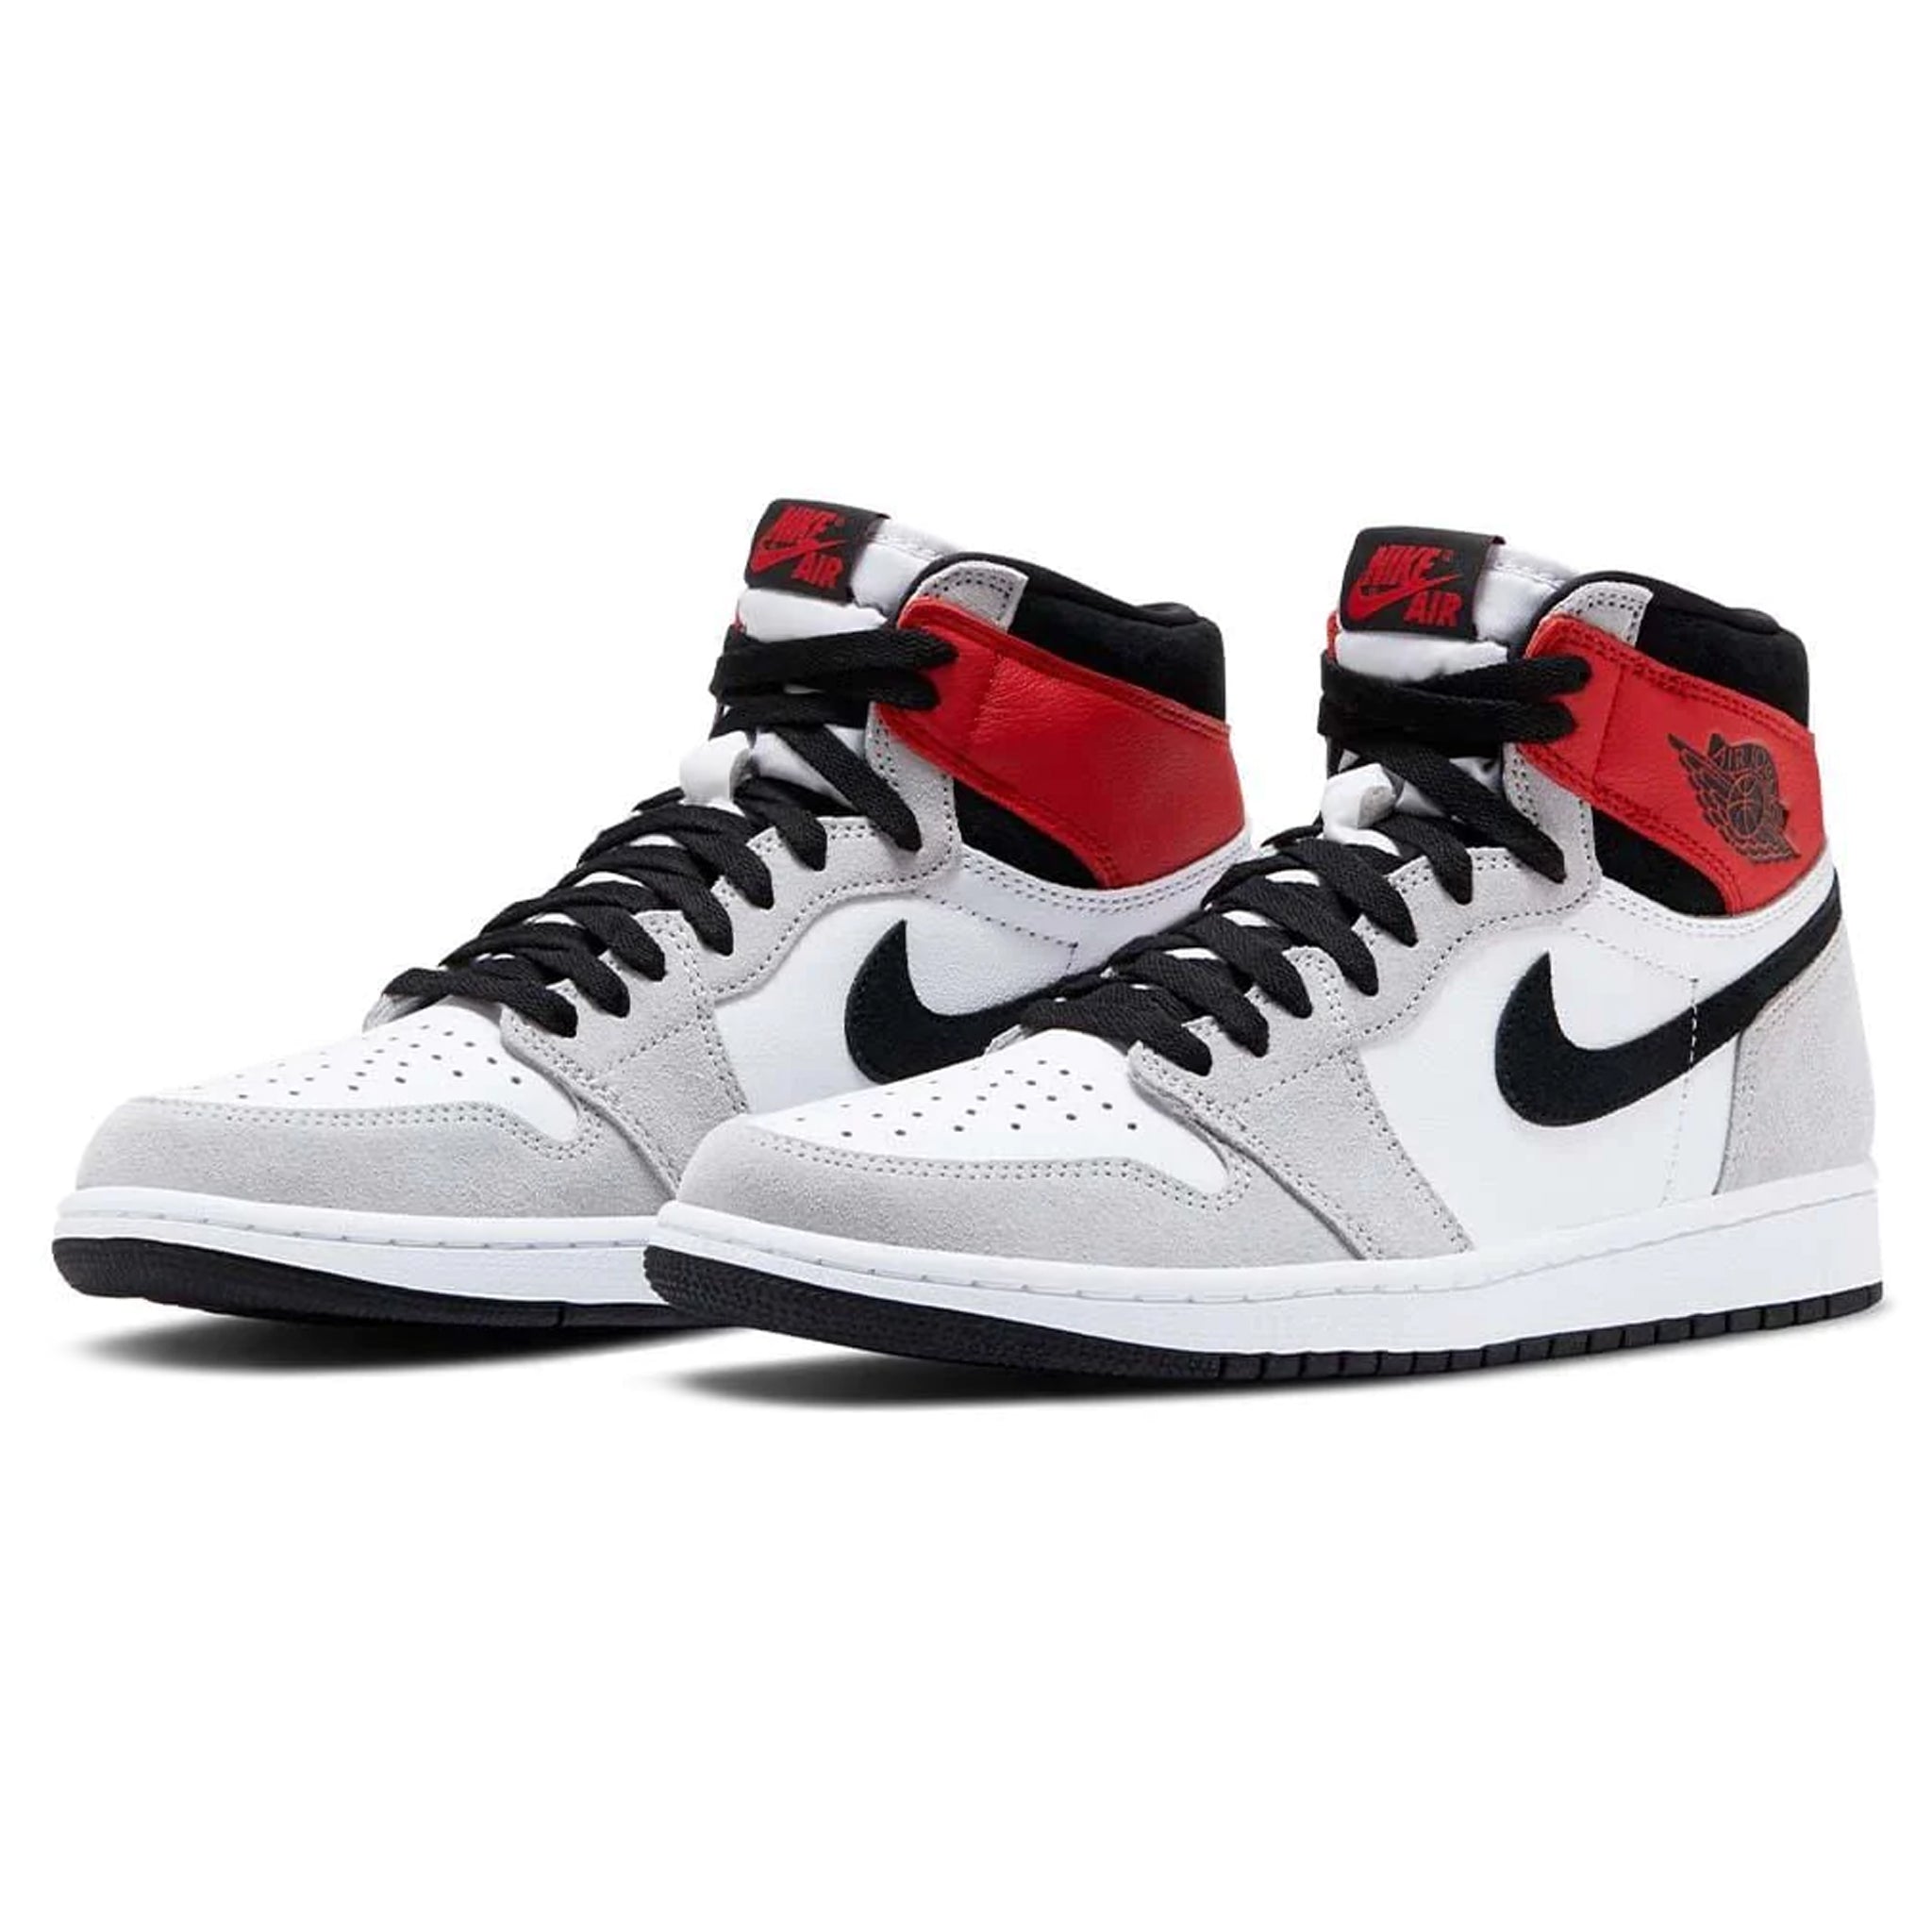 Front side view of Air Jordan 1 High Light Smoke Grey Sneaker 555088-126